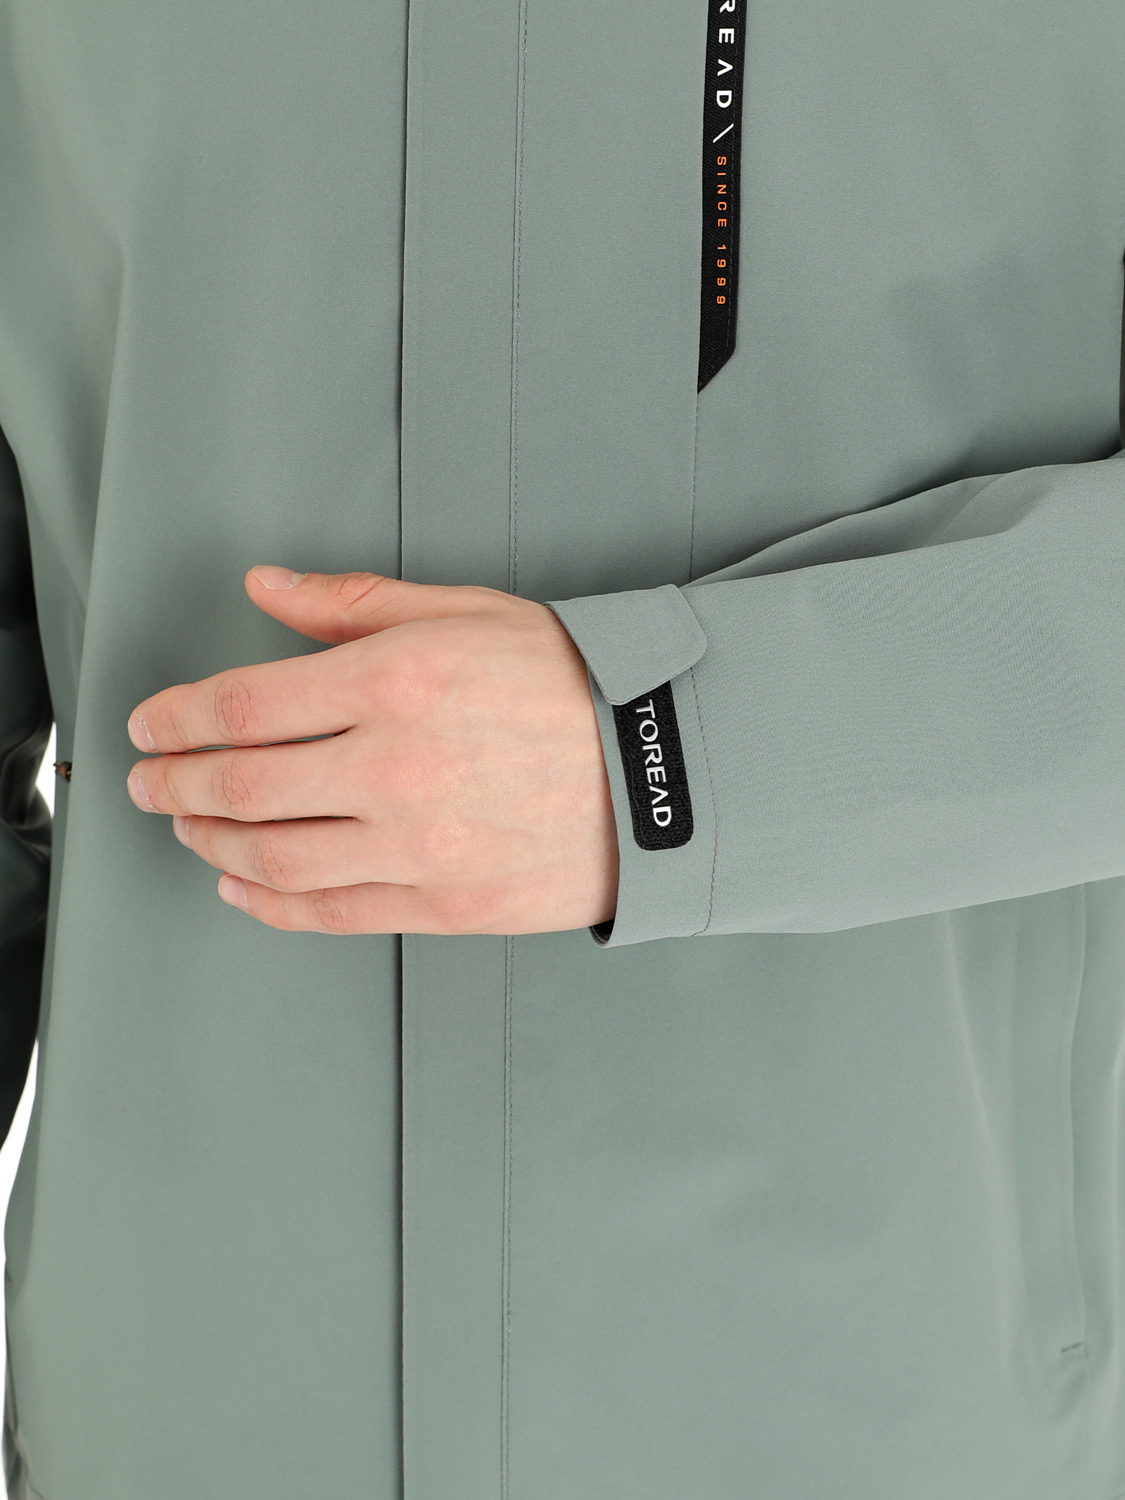 Куртка Toread Men's Jacket Grey lake green